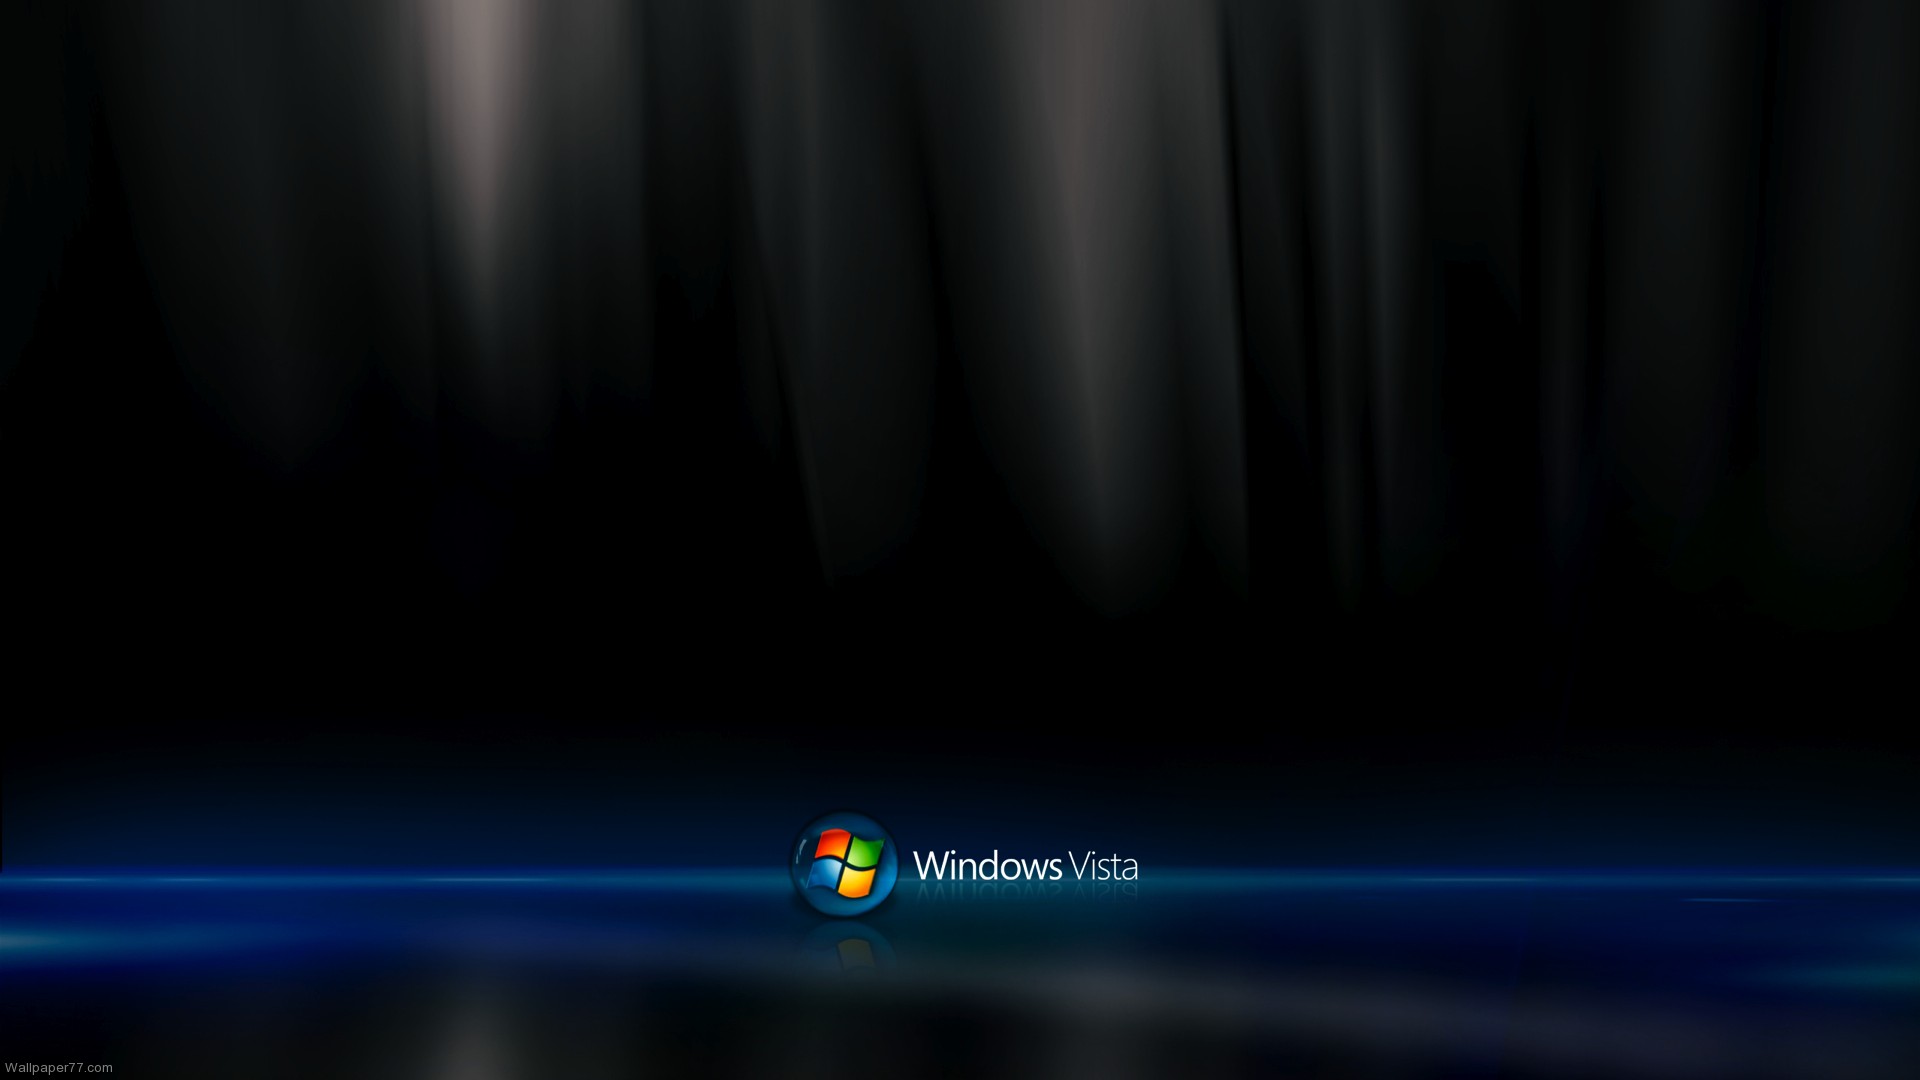 Windows Vista Desktop Wallpaper In